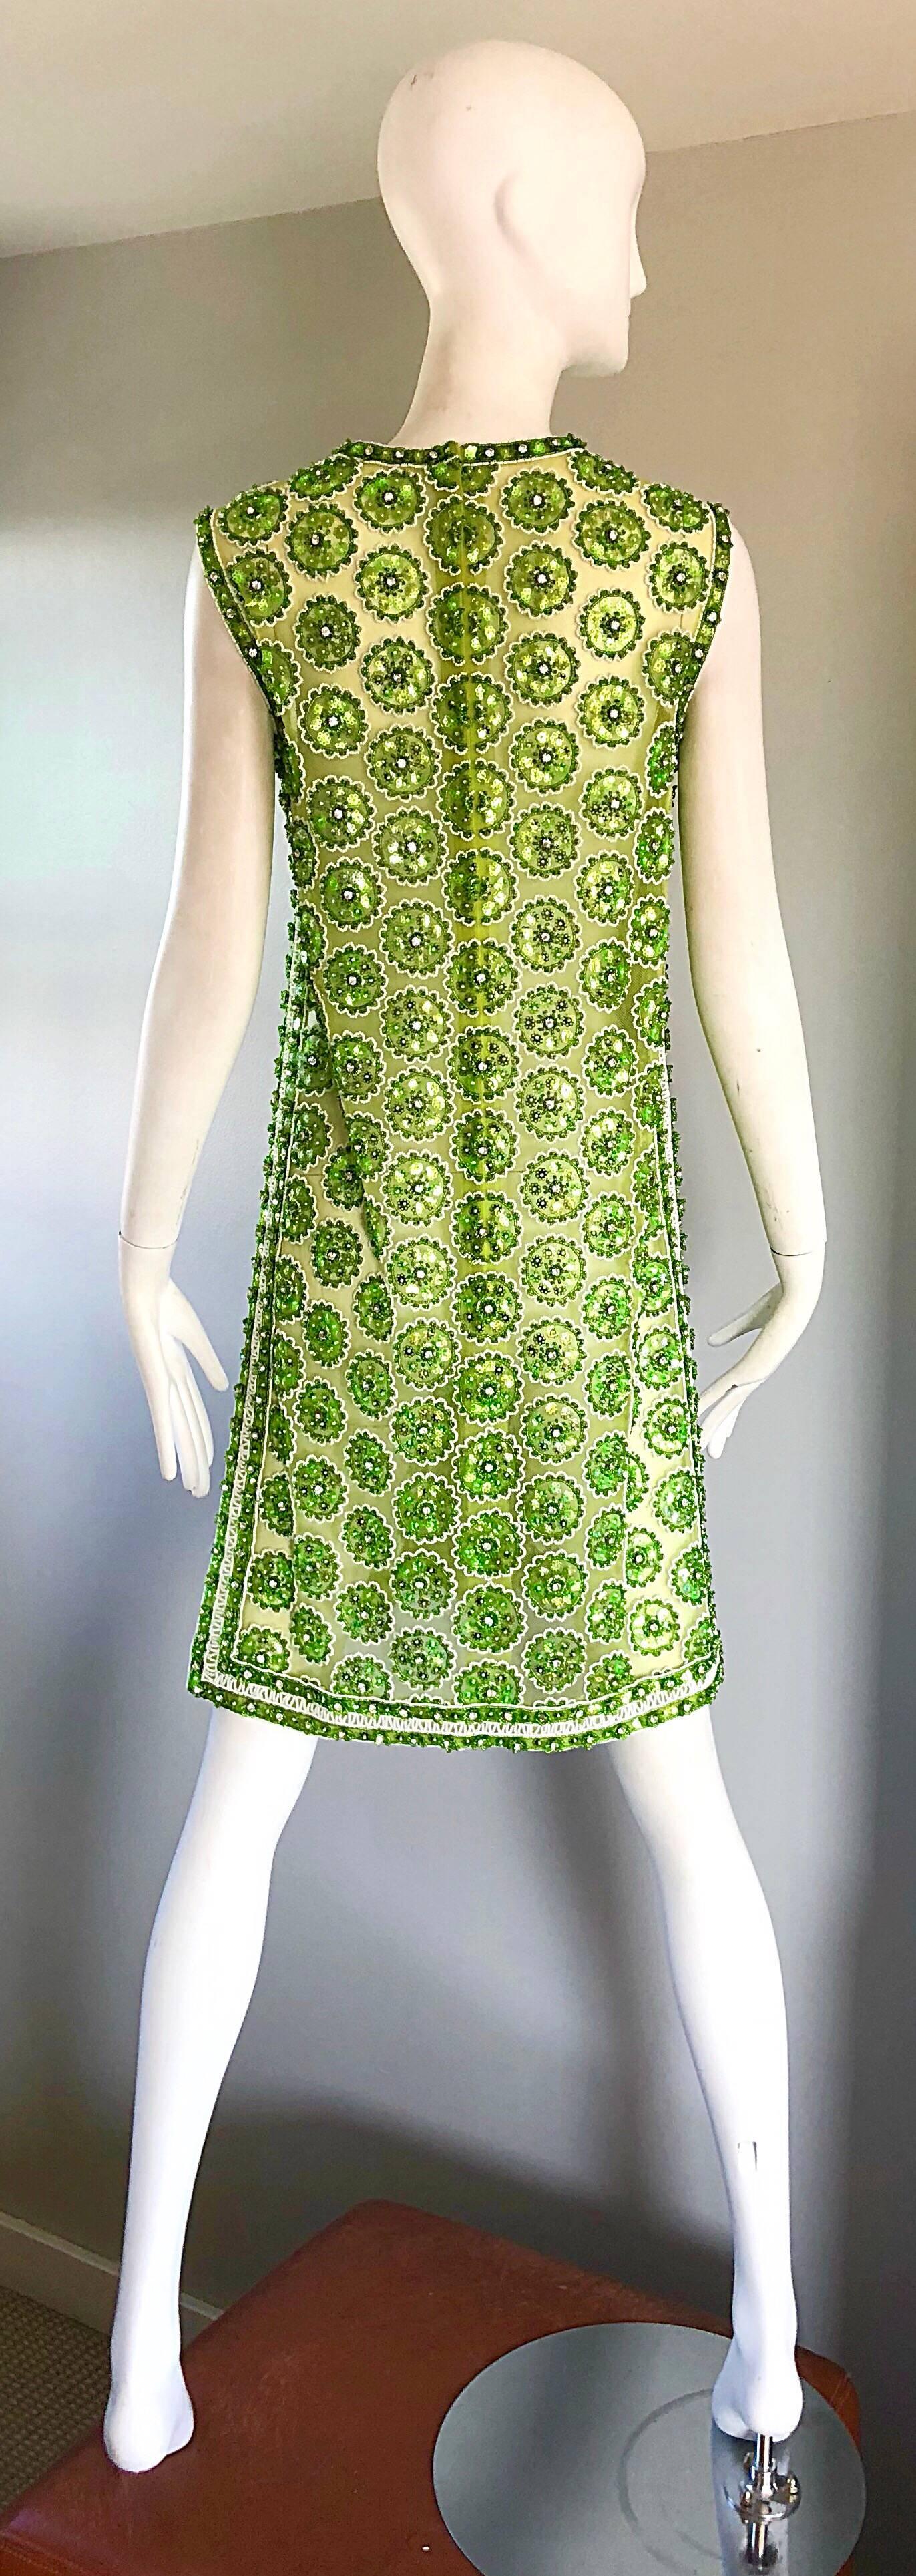 lime green sequin dress